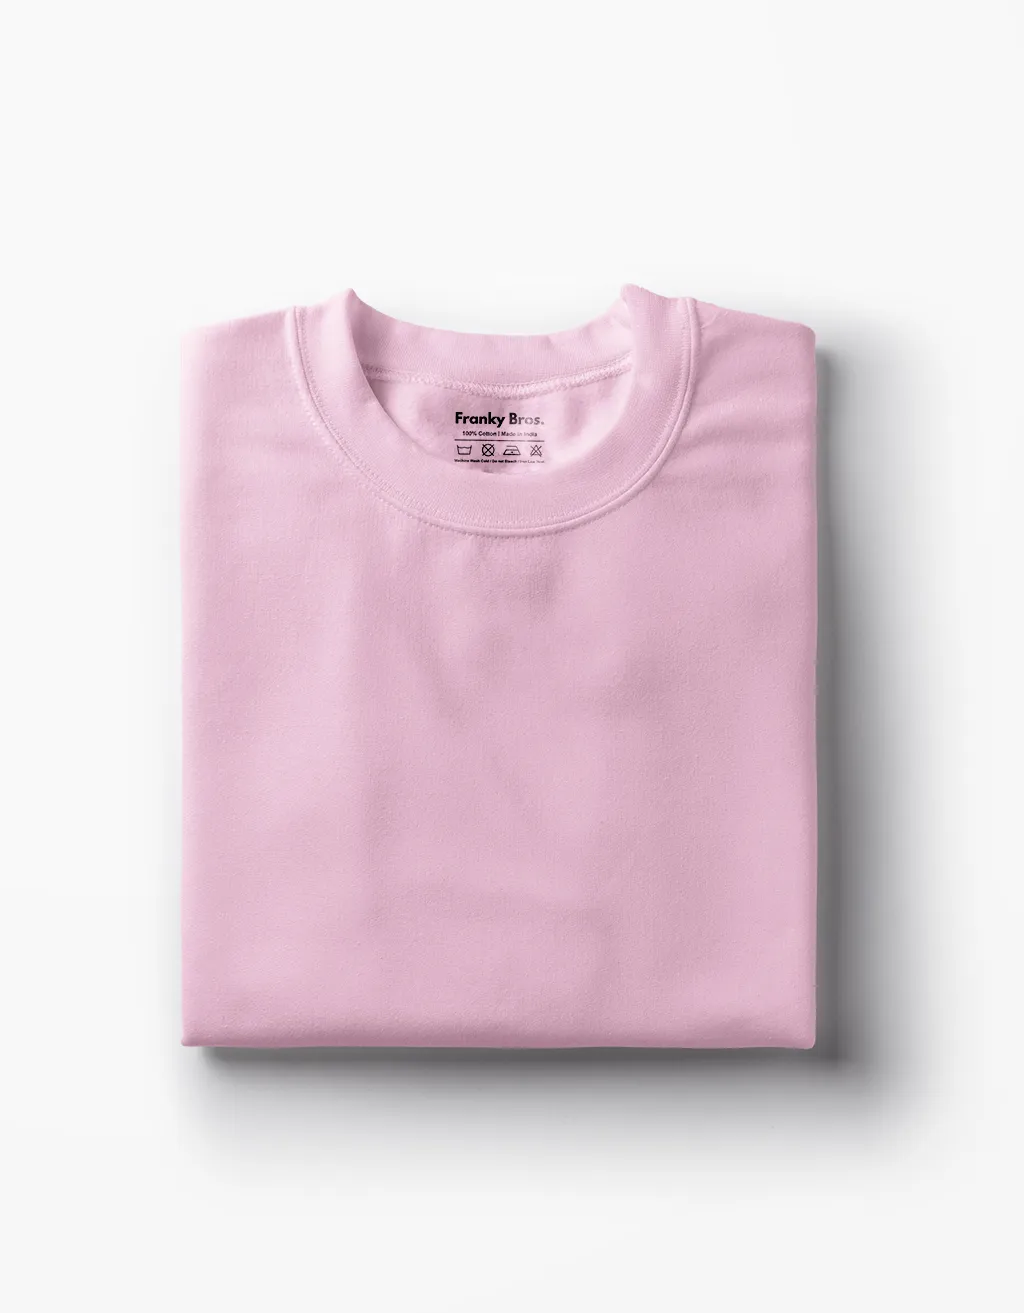 Plain Light Baby Pink T-shirt For Men, Plain T-shirts for Men, Plain Men T  Shirt, Plain Gents T-Shirts, पुरुषों की सादी टी शर्ट - Cloudsail Ventures,  Kolkata